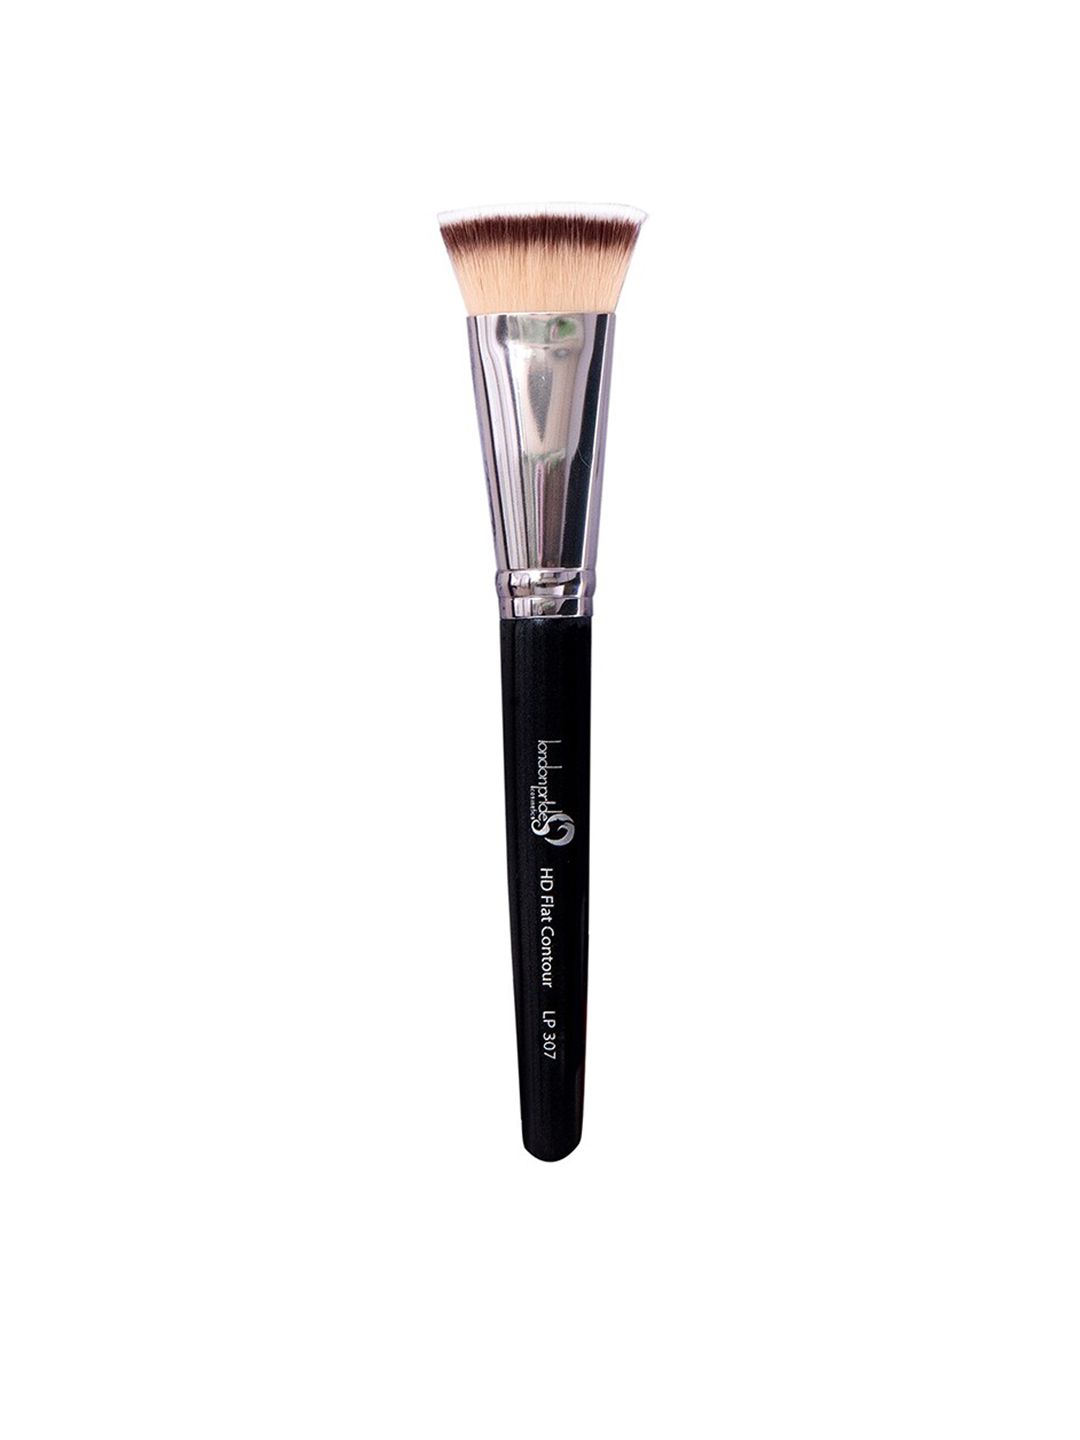 london pride cosmetics HD Flat Contour Makeup Brushes - Black LP-307 Price in India